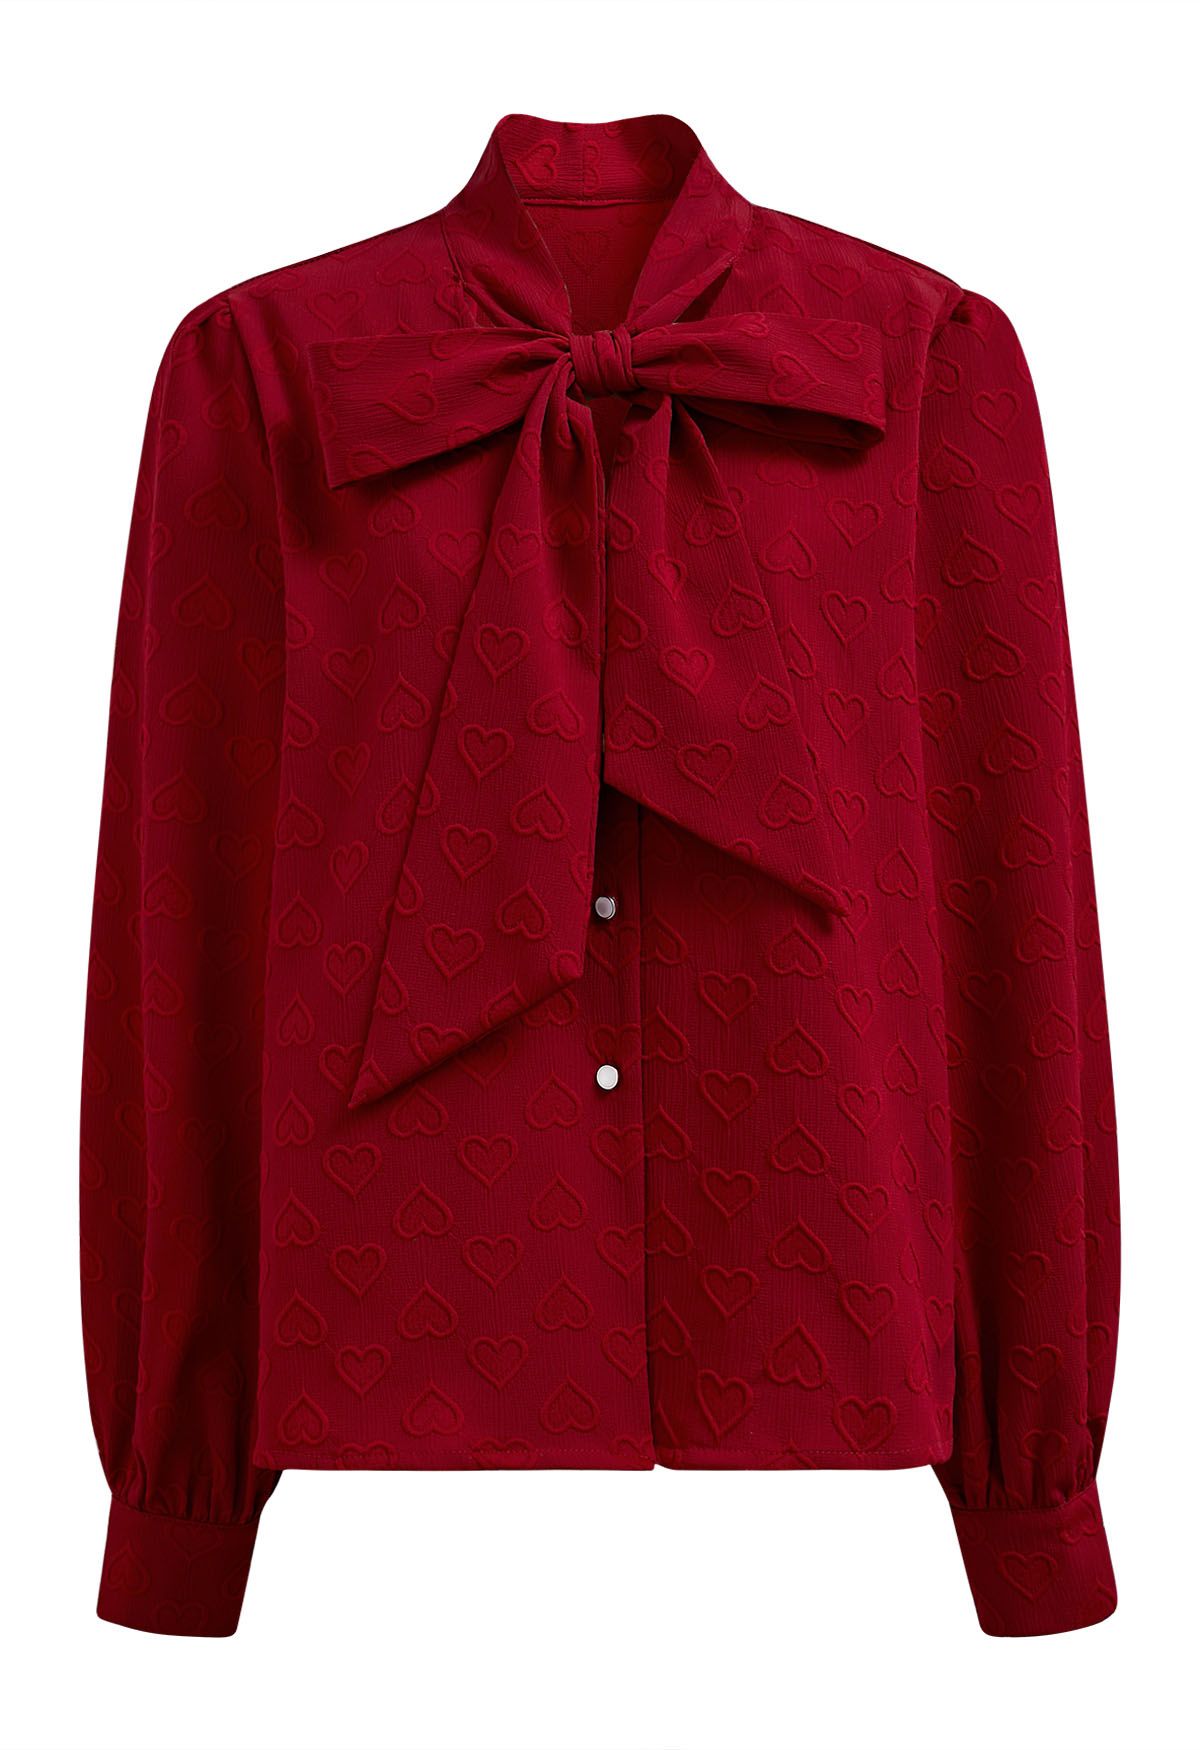 Dreamy Red Heart Bowknot Neckline Buttoned Shirt